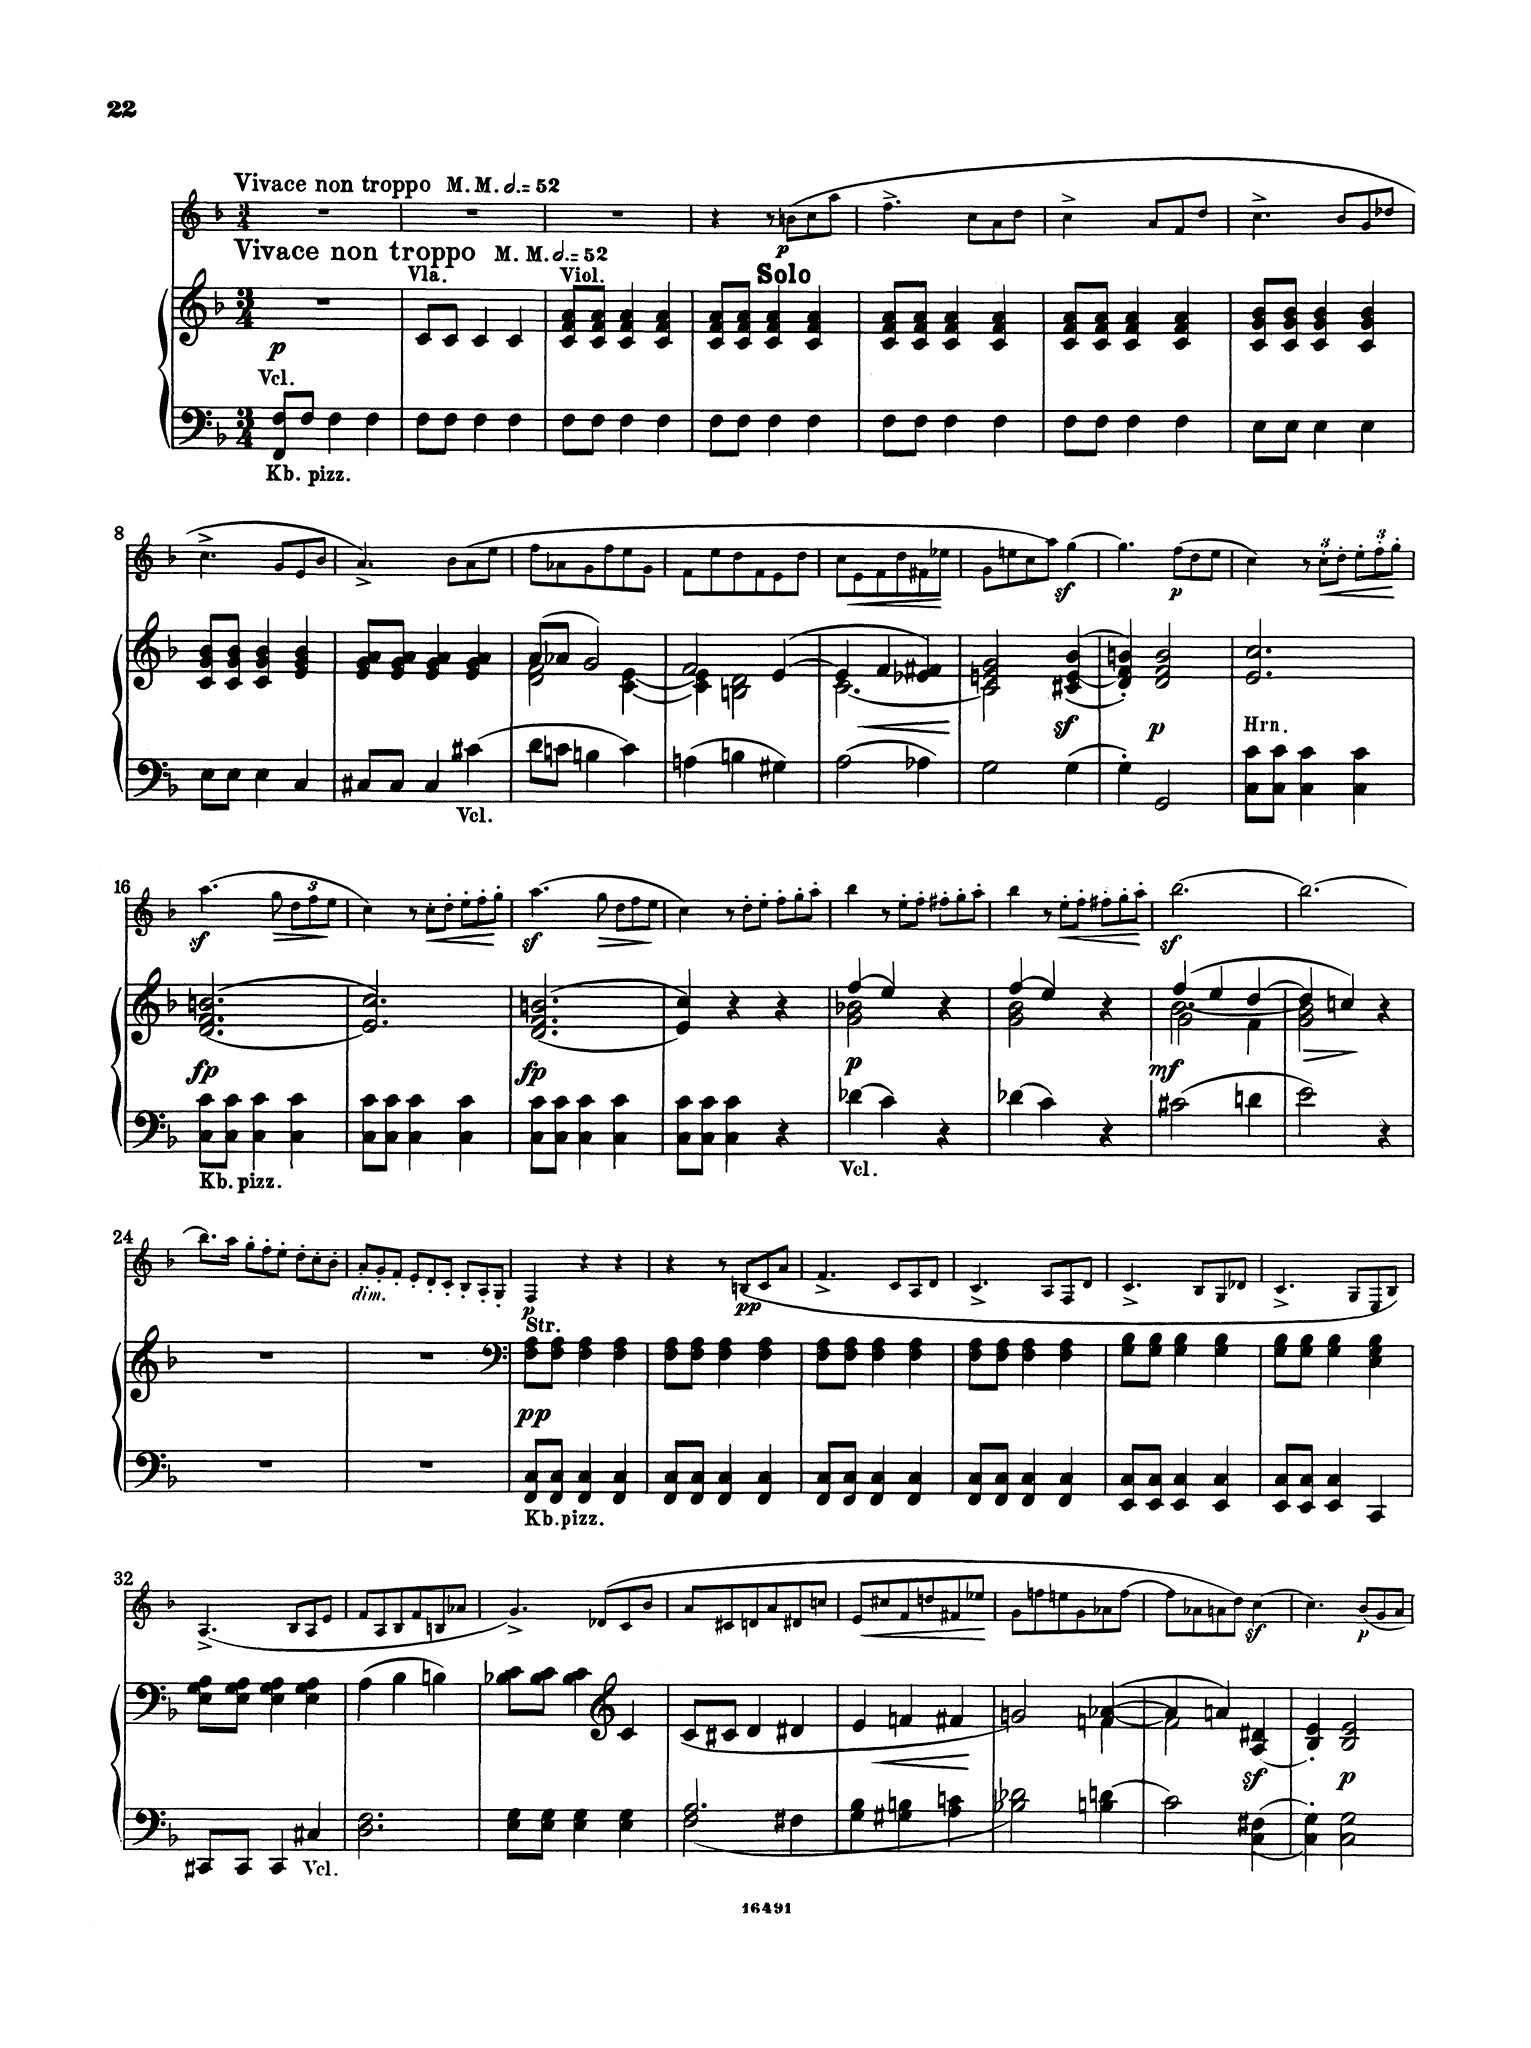 Clarinet Concerto No. 3 in F Minor, WoO 19 - Movement 3